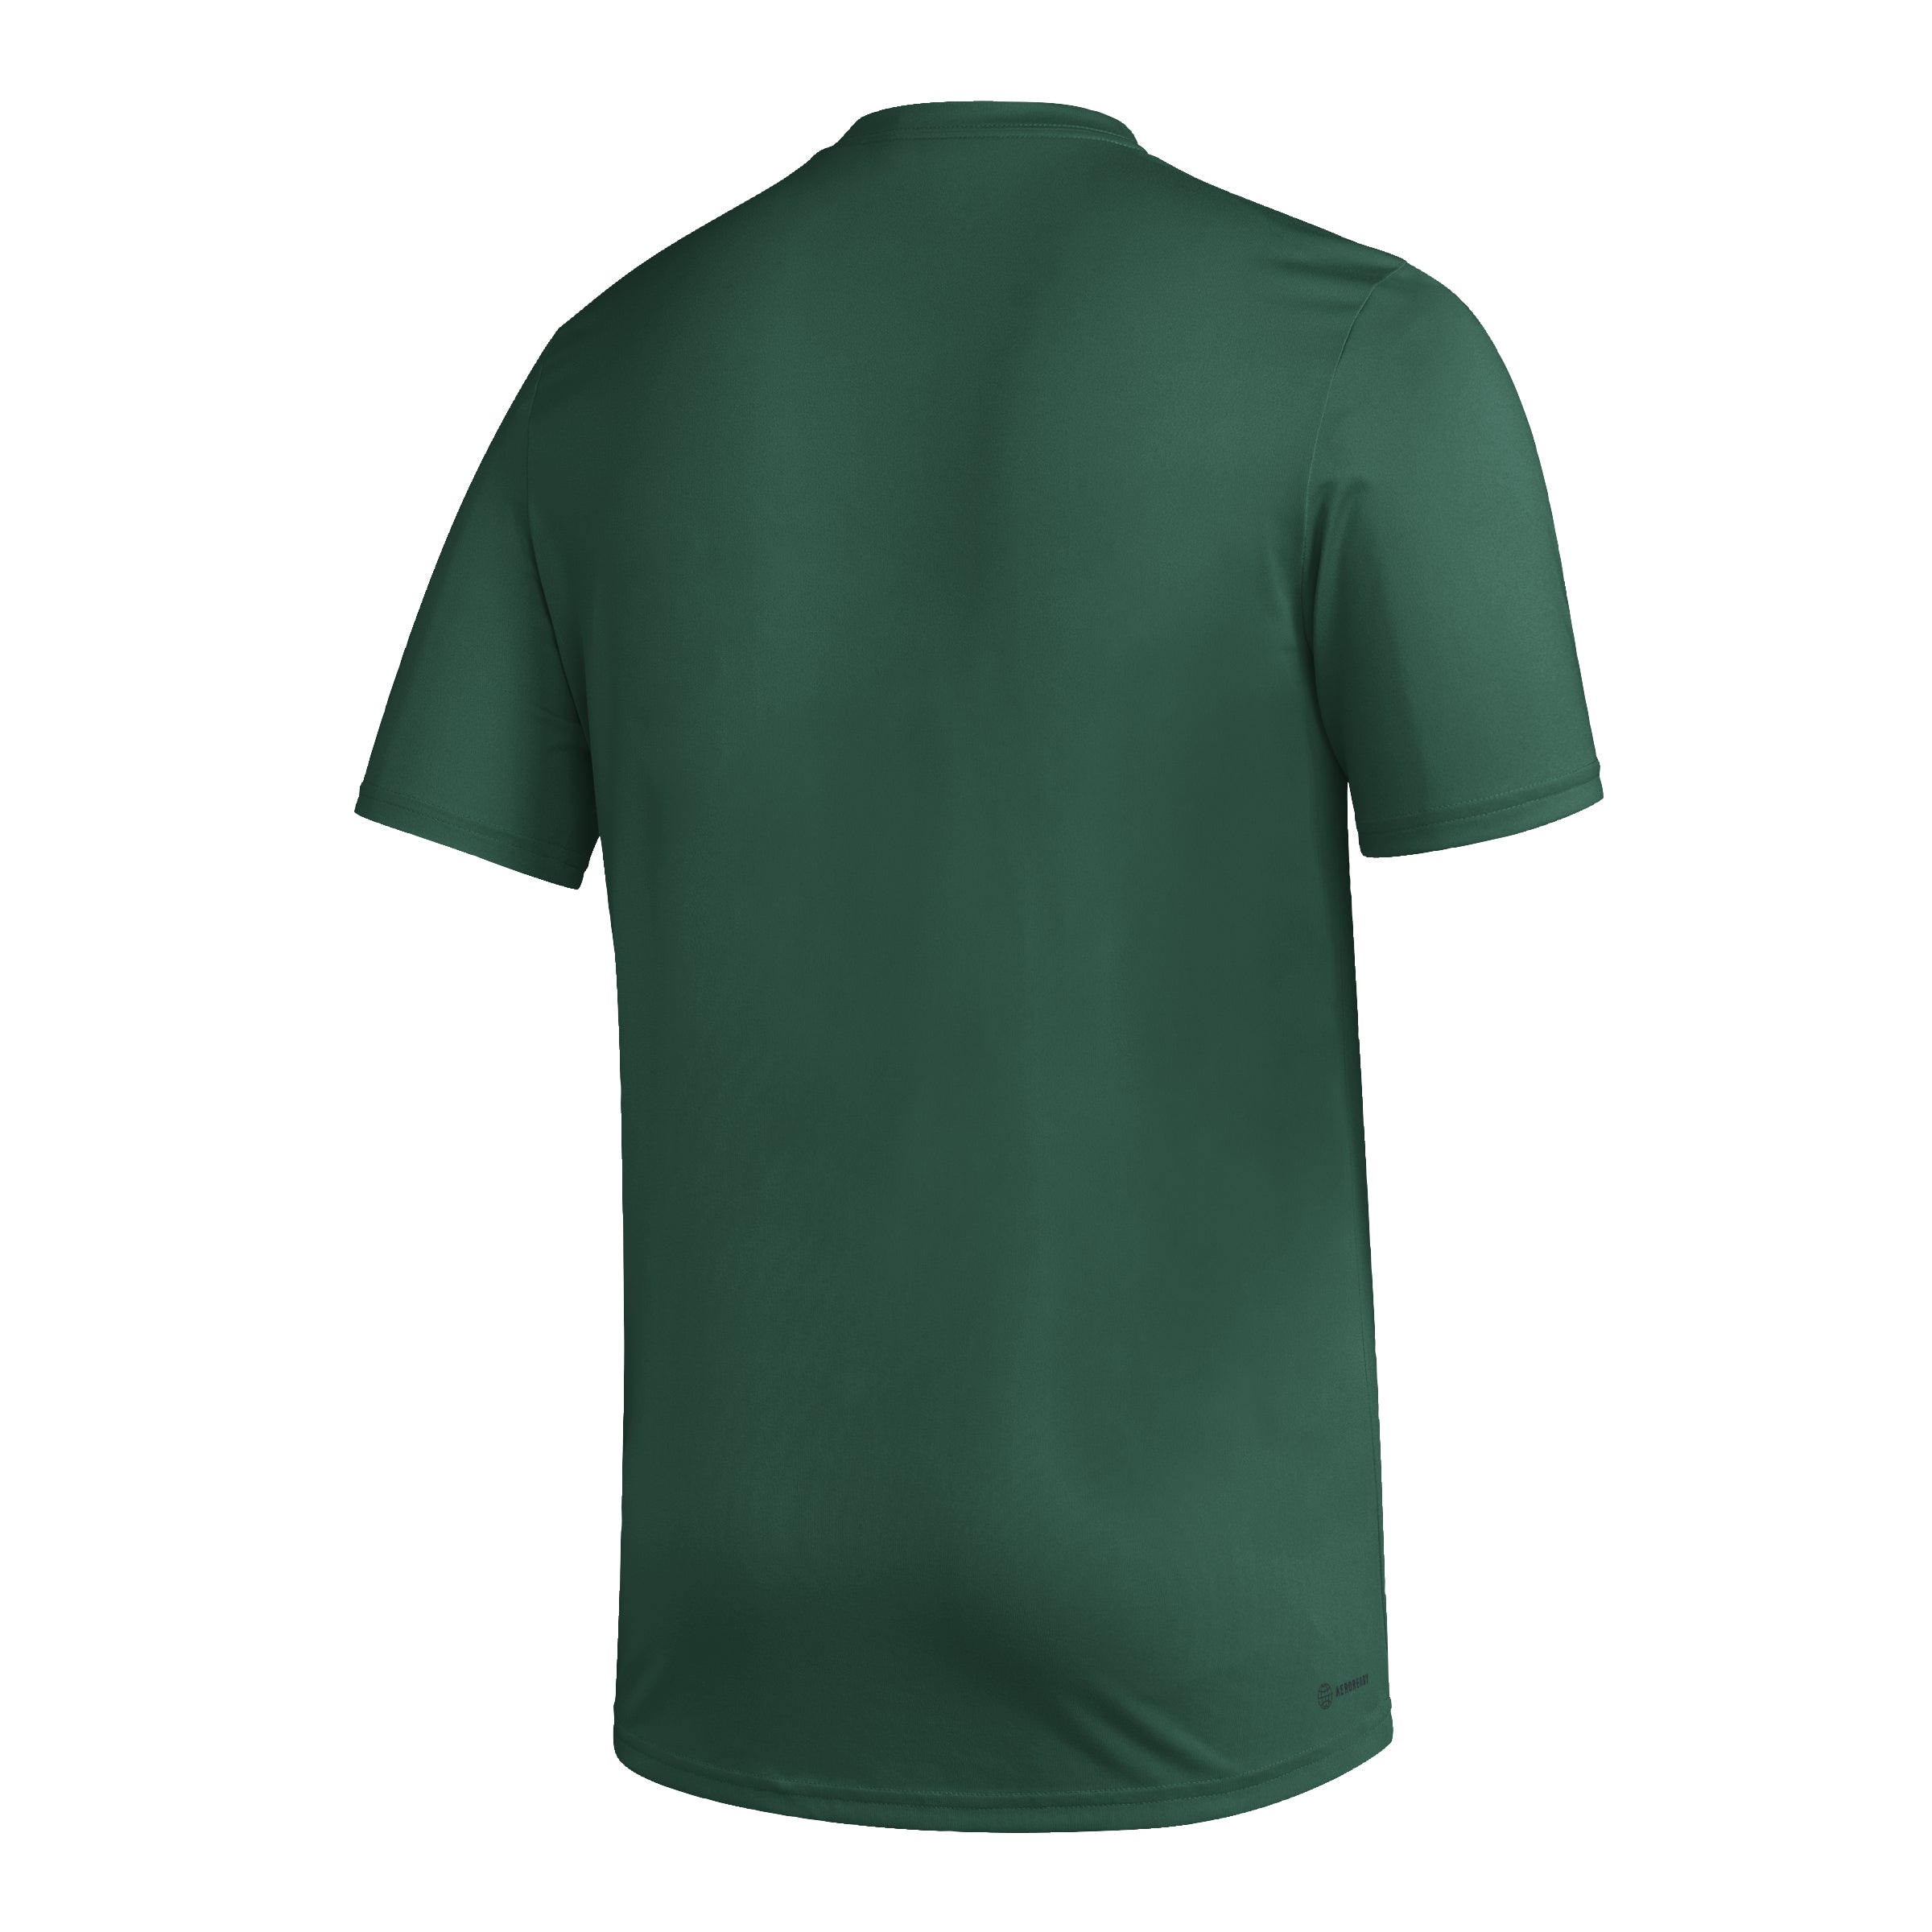 Miami Hurricanes adidas 'Miami Canes' Aeroready Pregame T-Shirt - Green